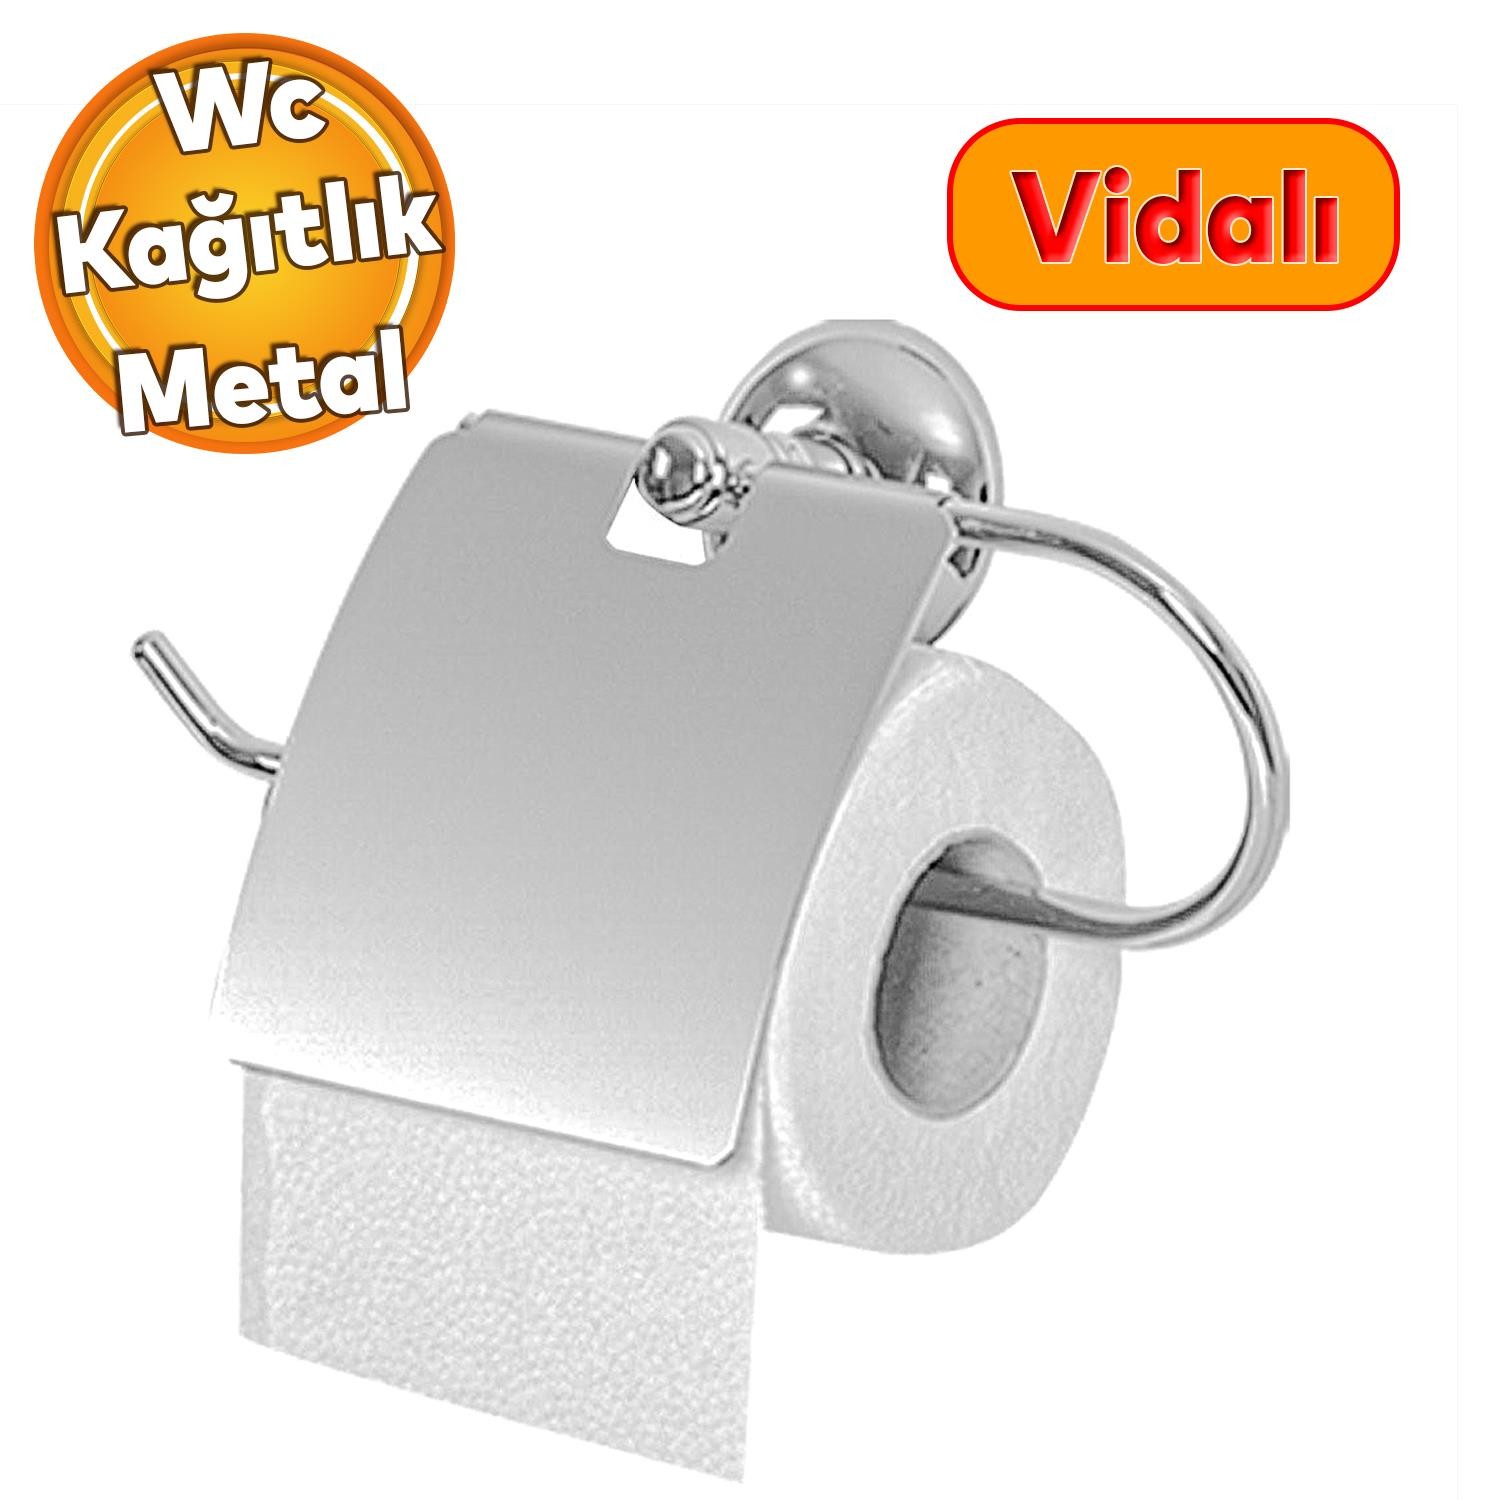 Krom Metal Sağlam Aparat Vidalı Lavabo Banyo Wc Bez Havlu Çatal Askı Tuvalet Kağıtlık 3'lü Set